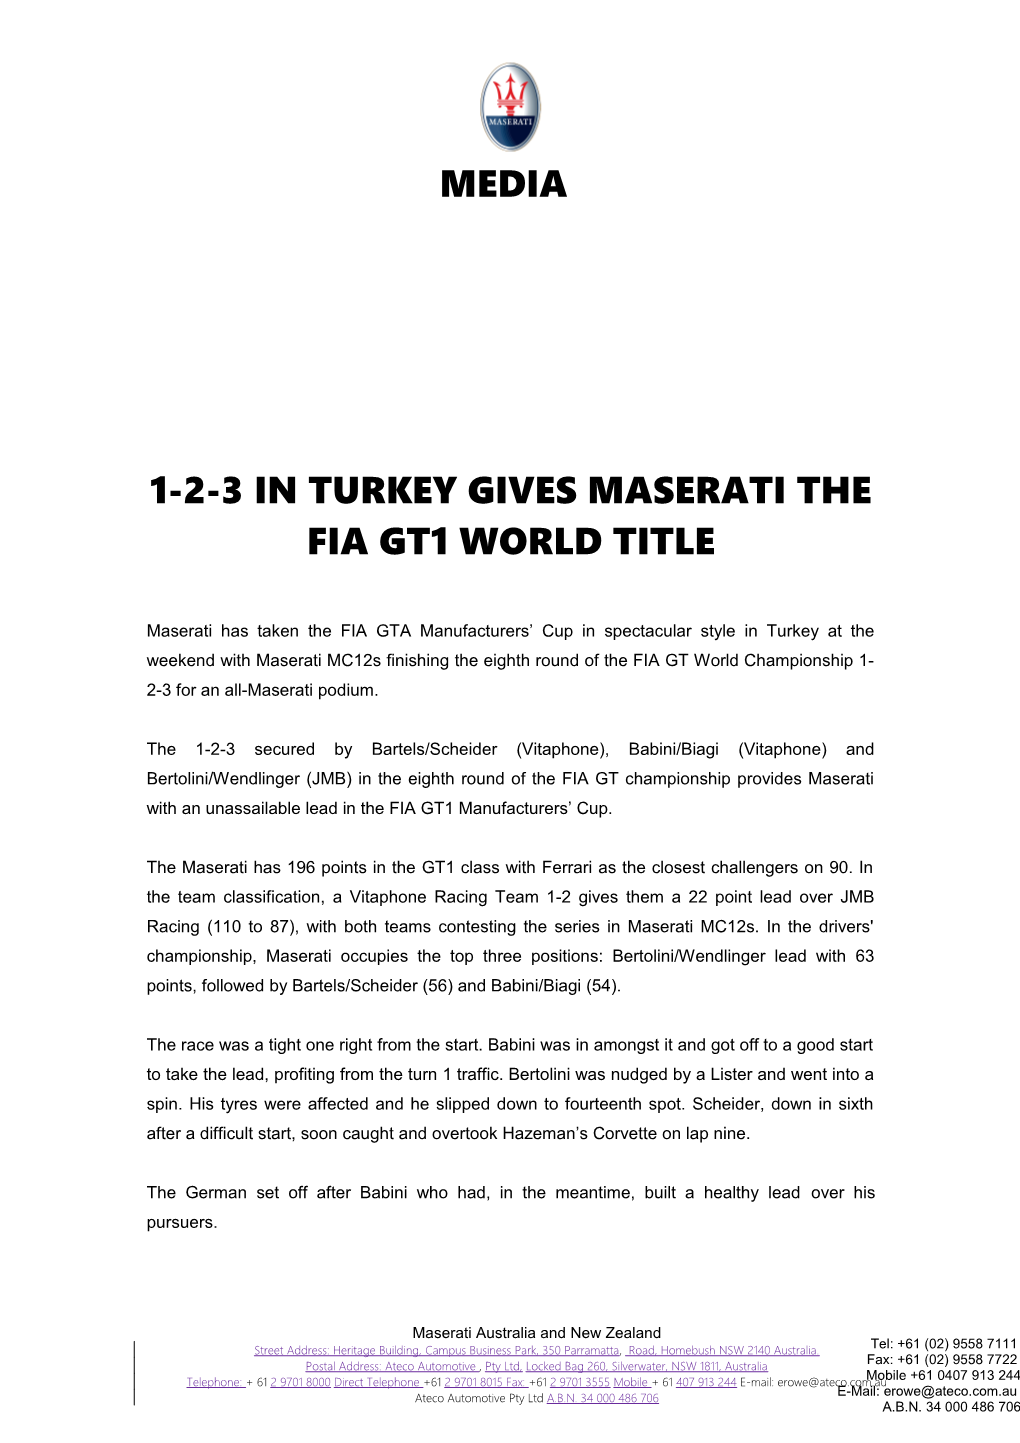 1-2-3 in Turkey Gives Maserati the Fia Gt1 World Title